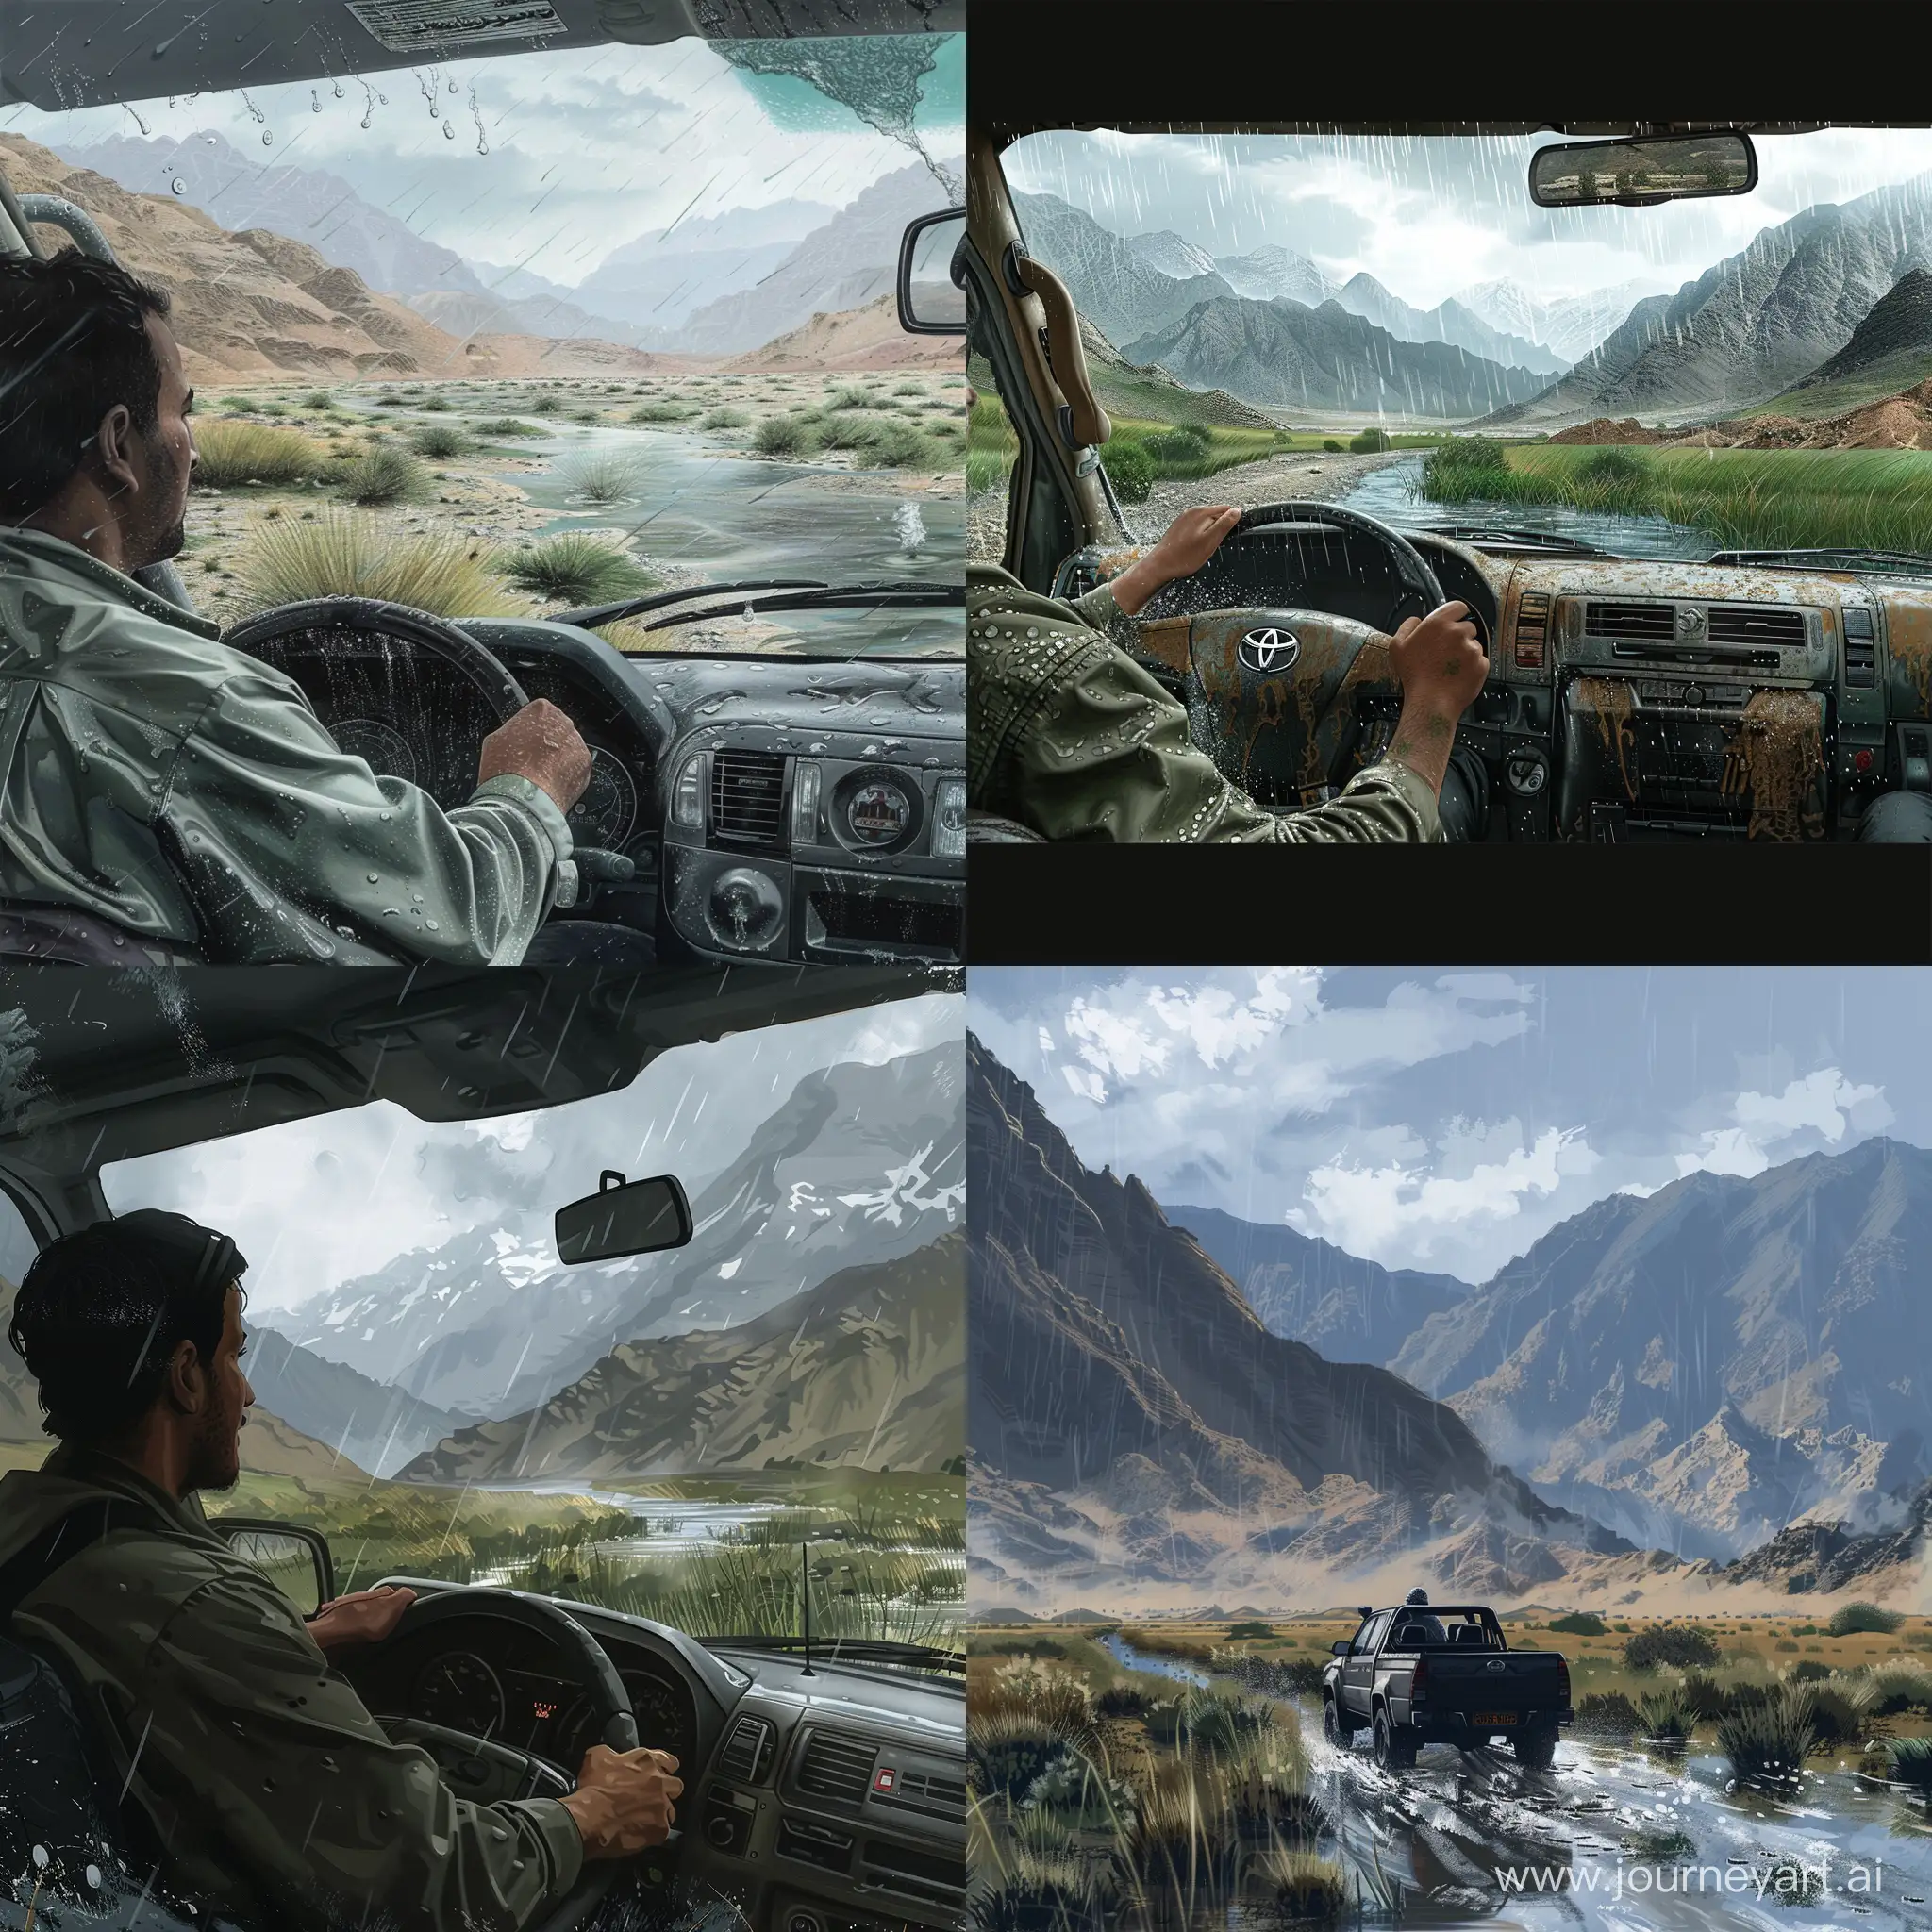 Saudi-Man-Driving-Hilux-in-Rainy-Mountain-Terrain